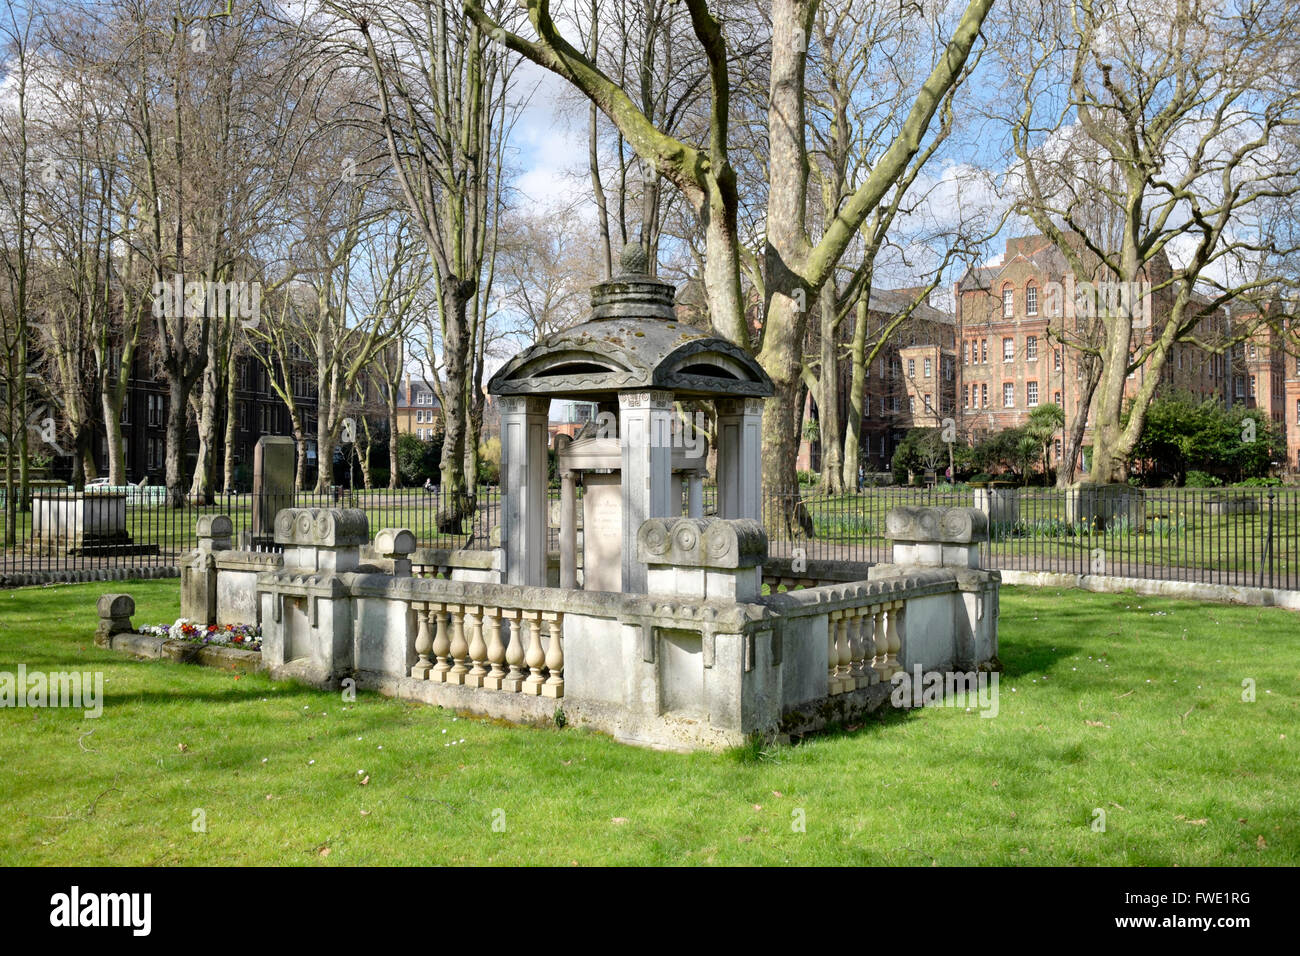 The Soane Mausoleum, St Pancras Garden London potential inspiration Sir Giles Gilbert Scott's design iconic K2 telephone box Stock Photo